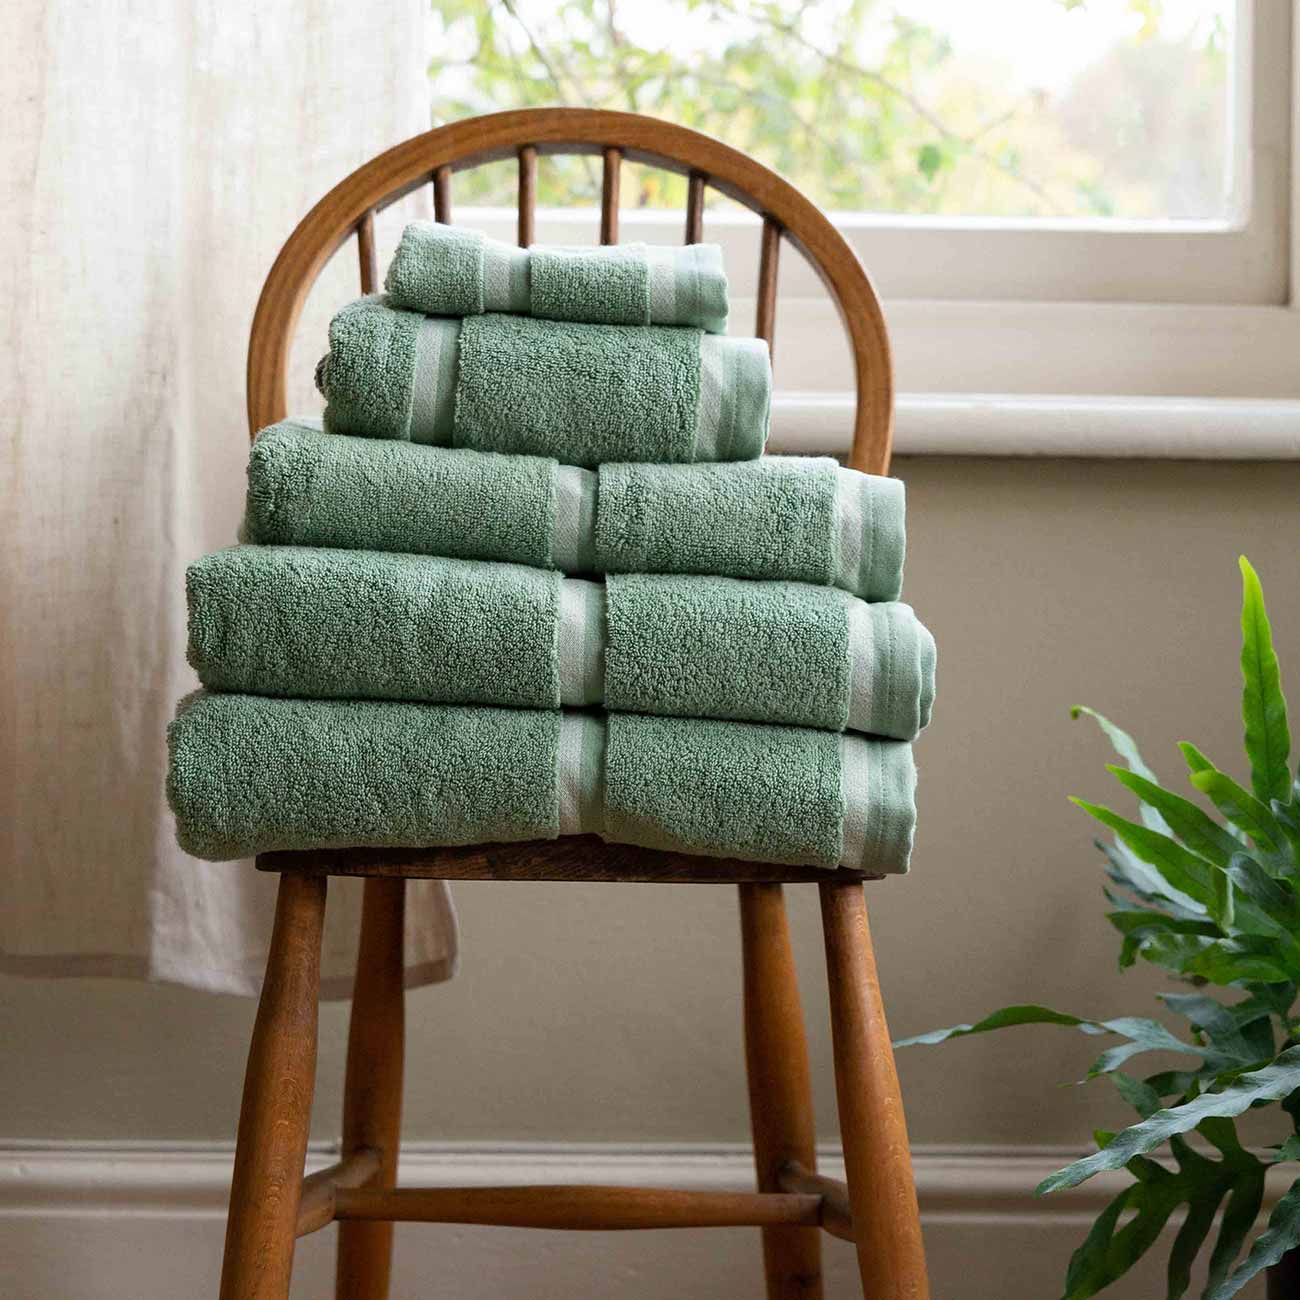 Meadow Green Towels